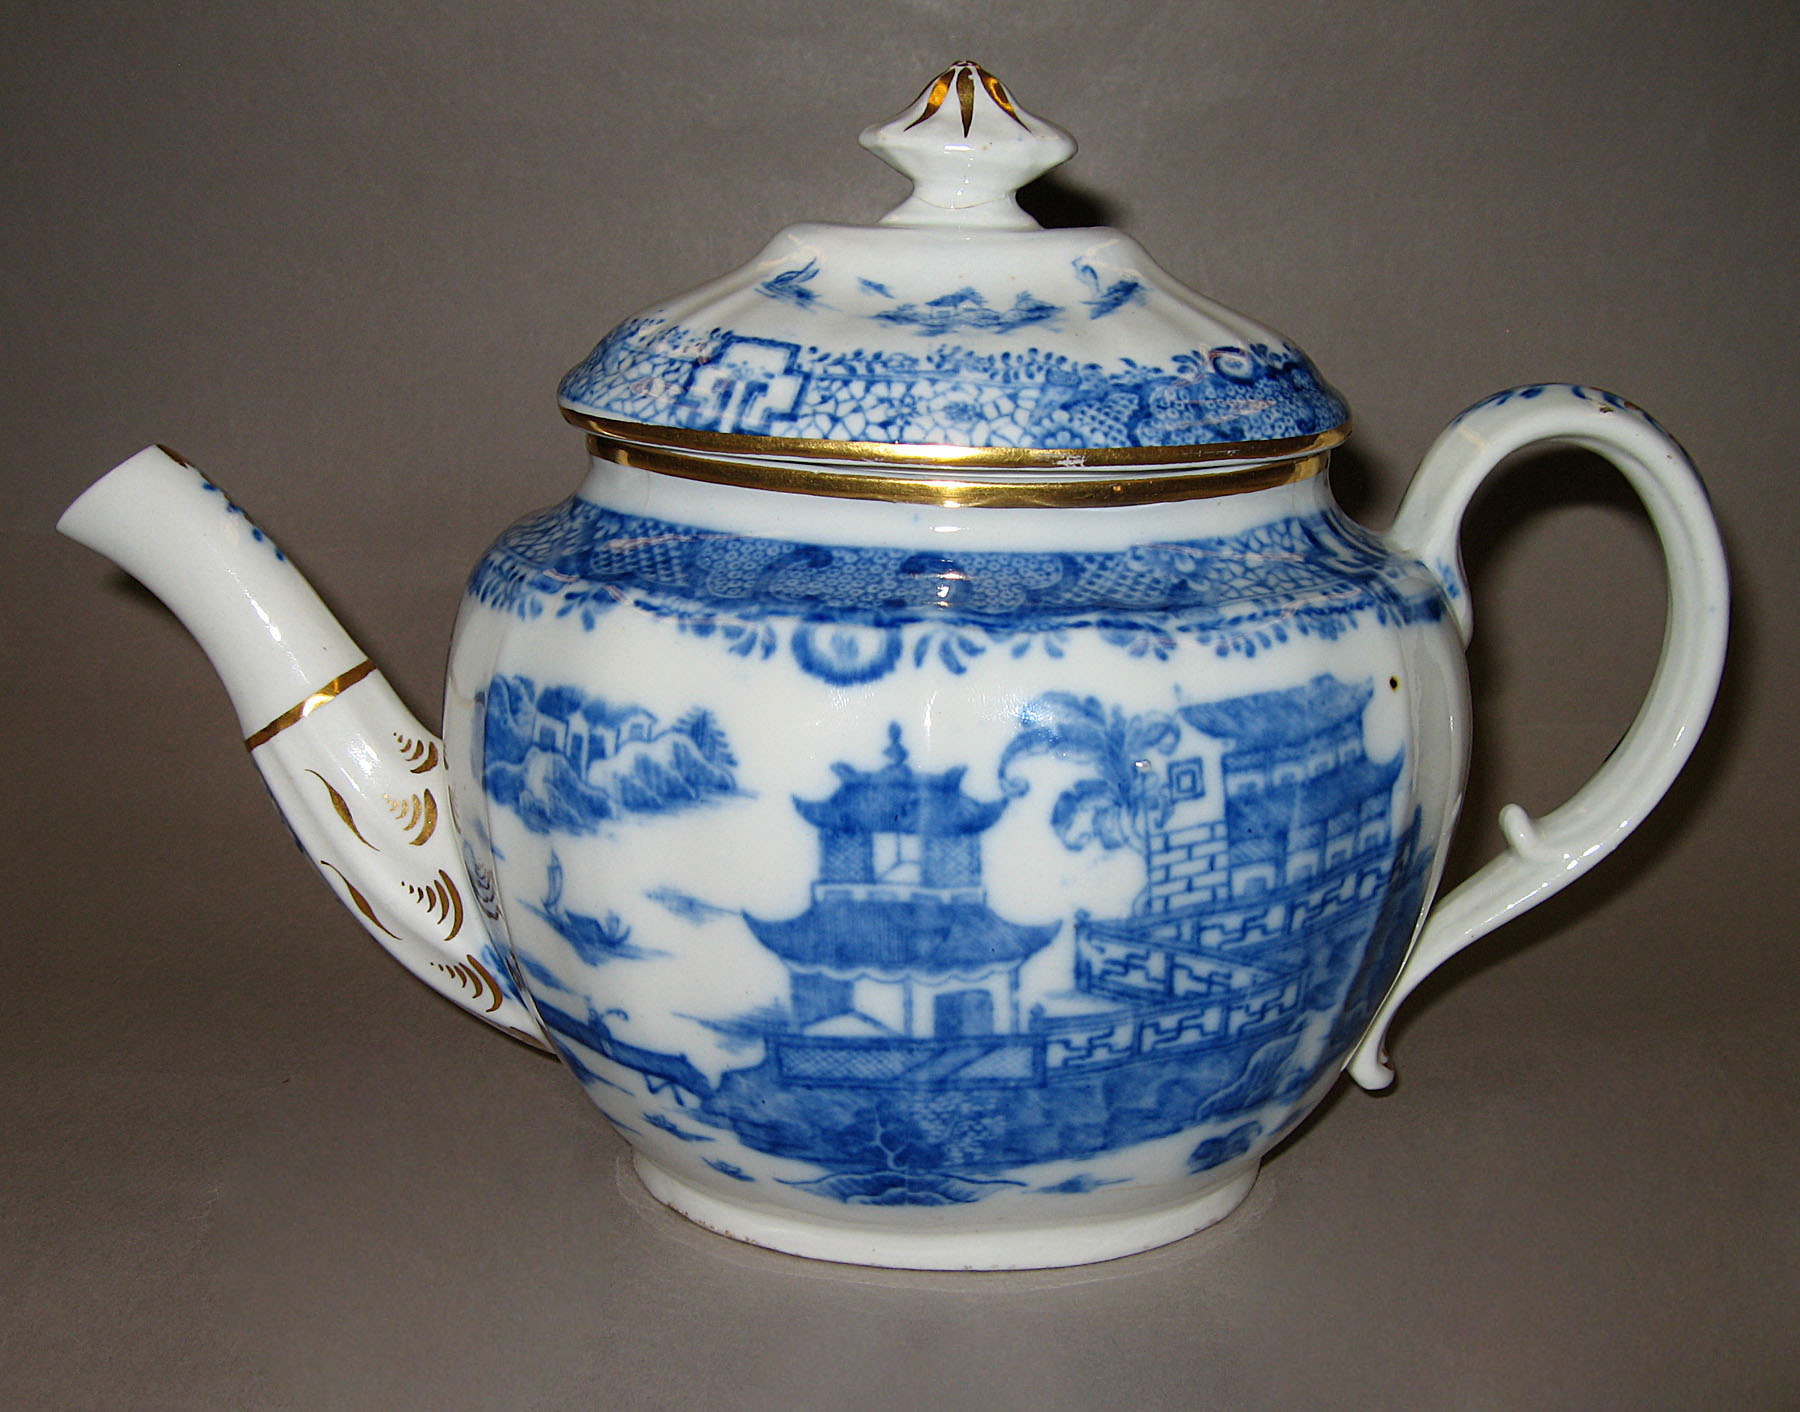 1975.0085.001 A, B Teapot